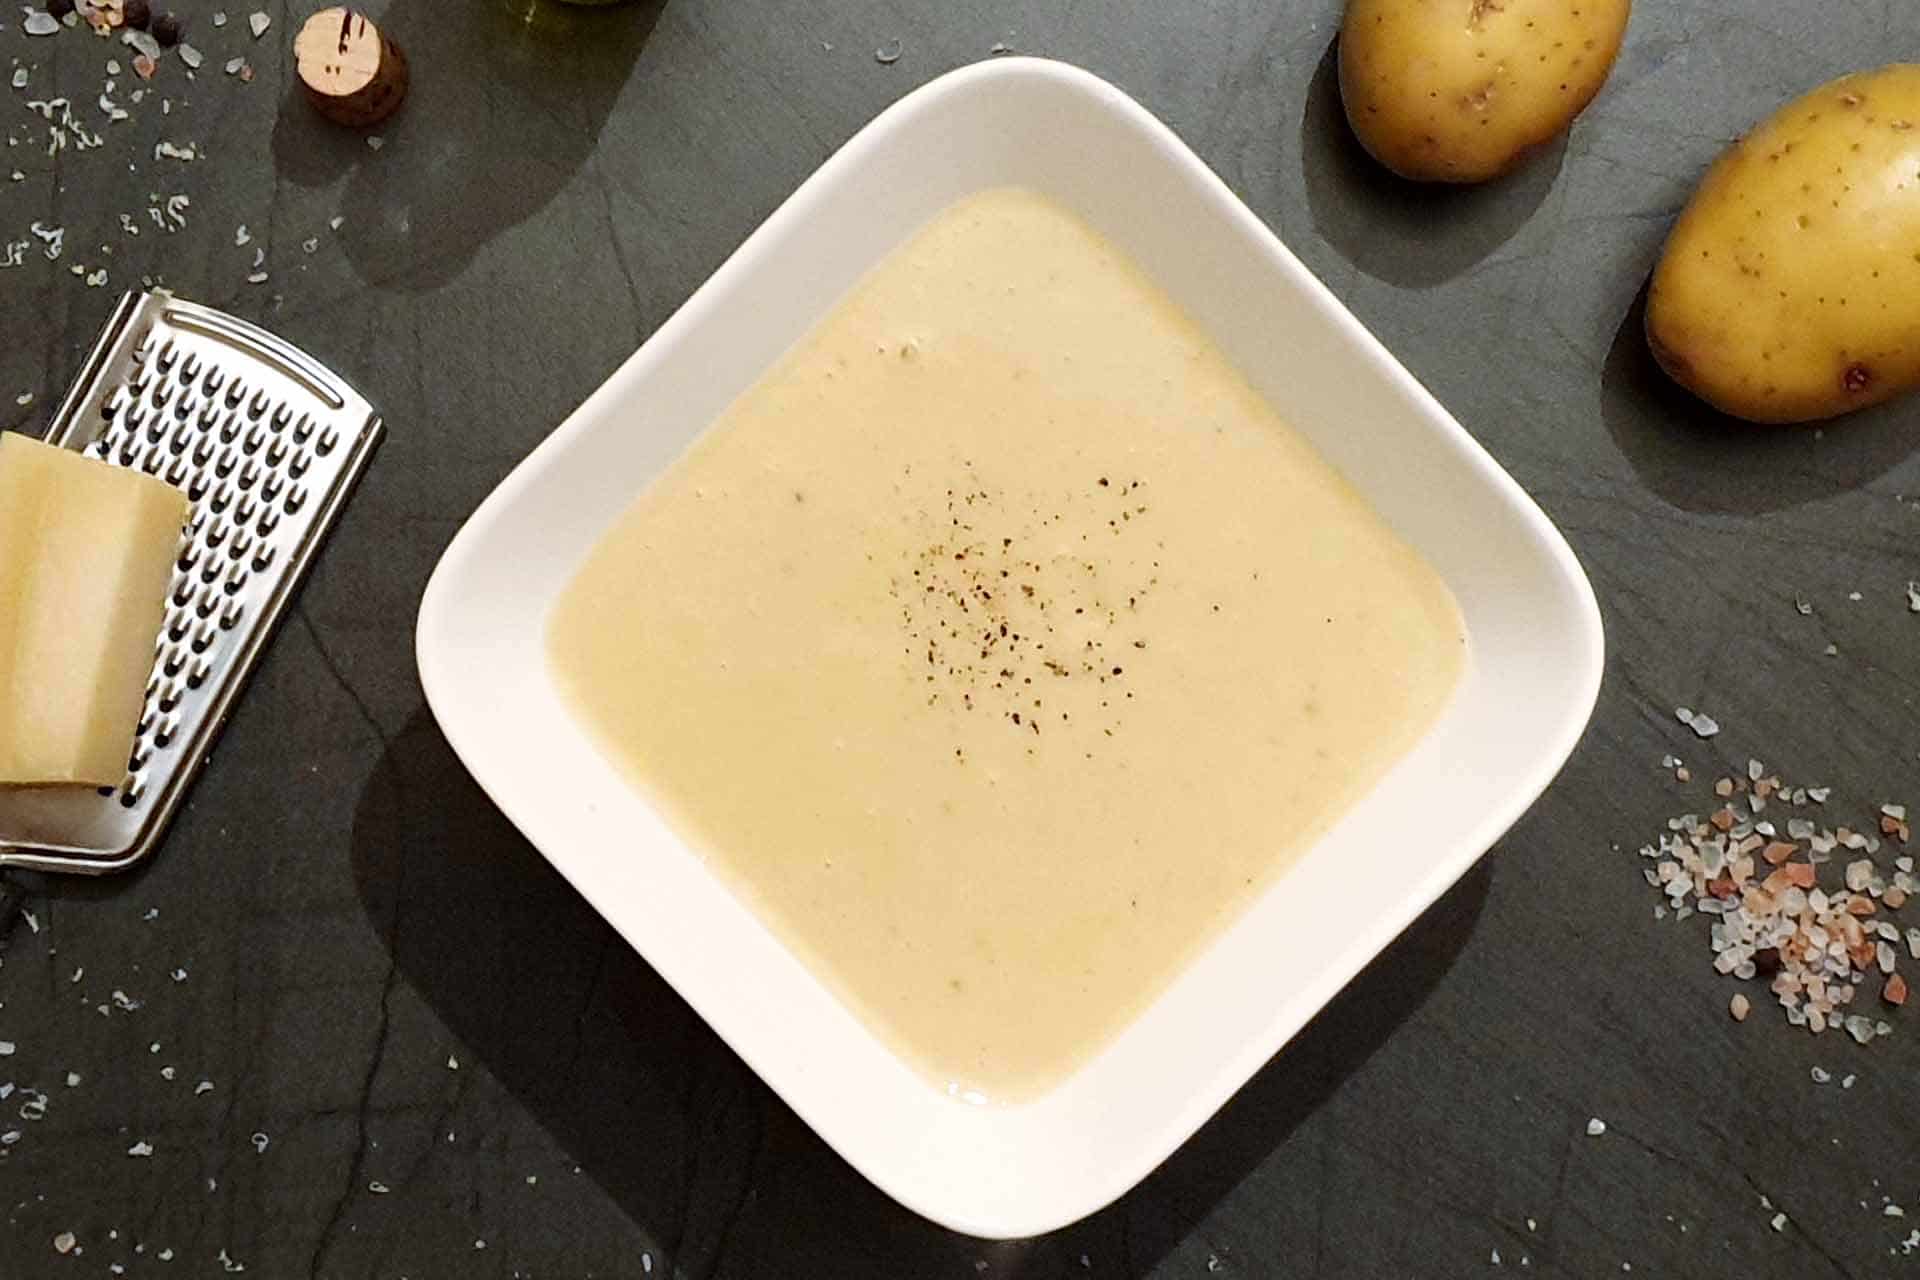 Cream of potato soup with parmesan